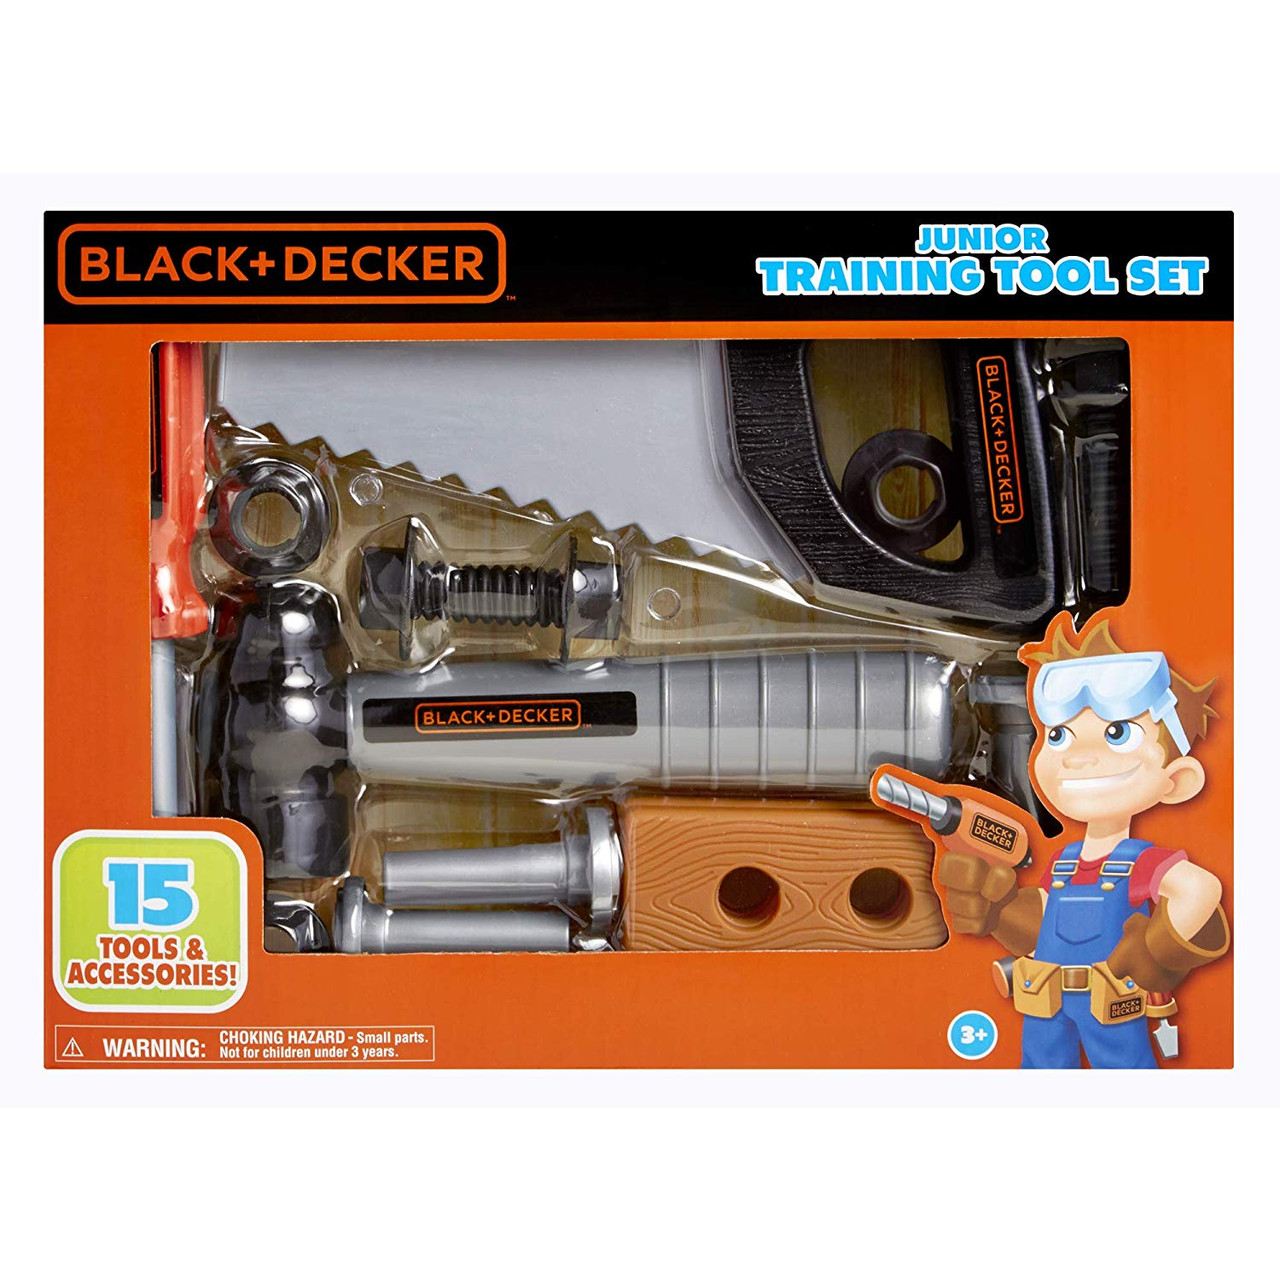 New Black & Decker 15 Piece Tool Set Junior Play Training Set Toy